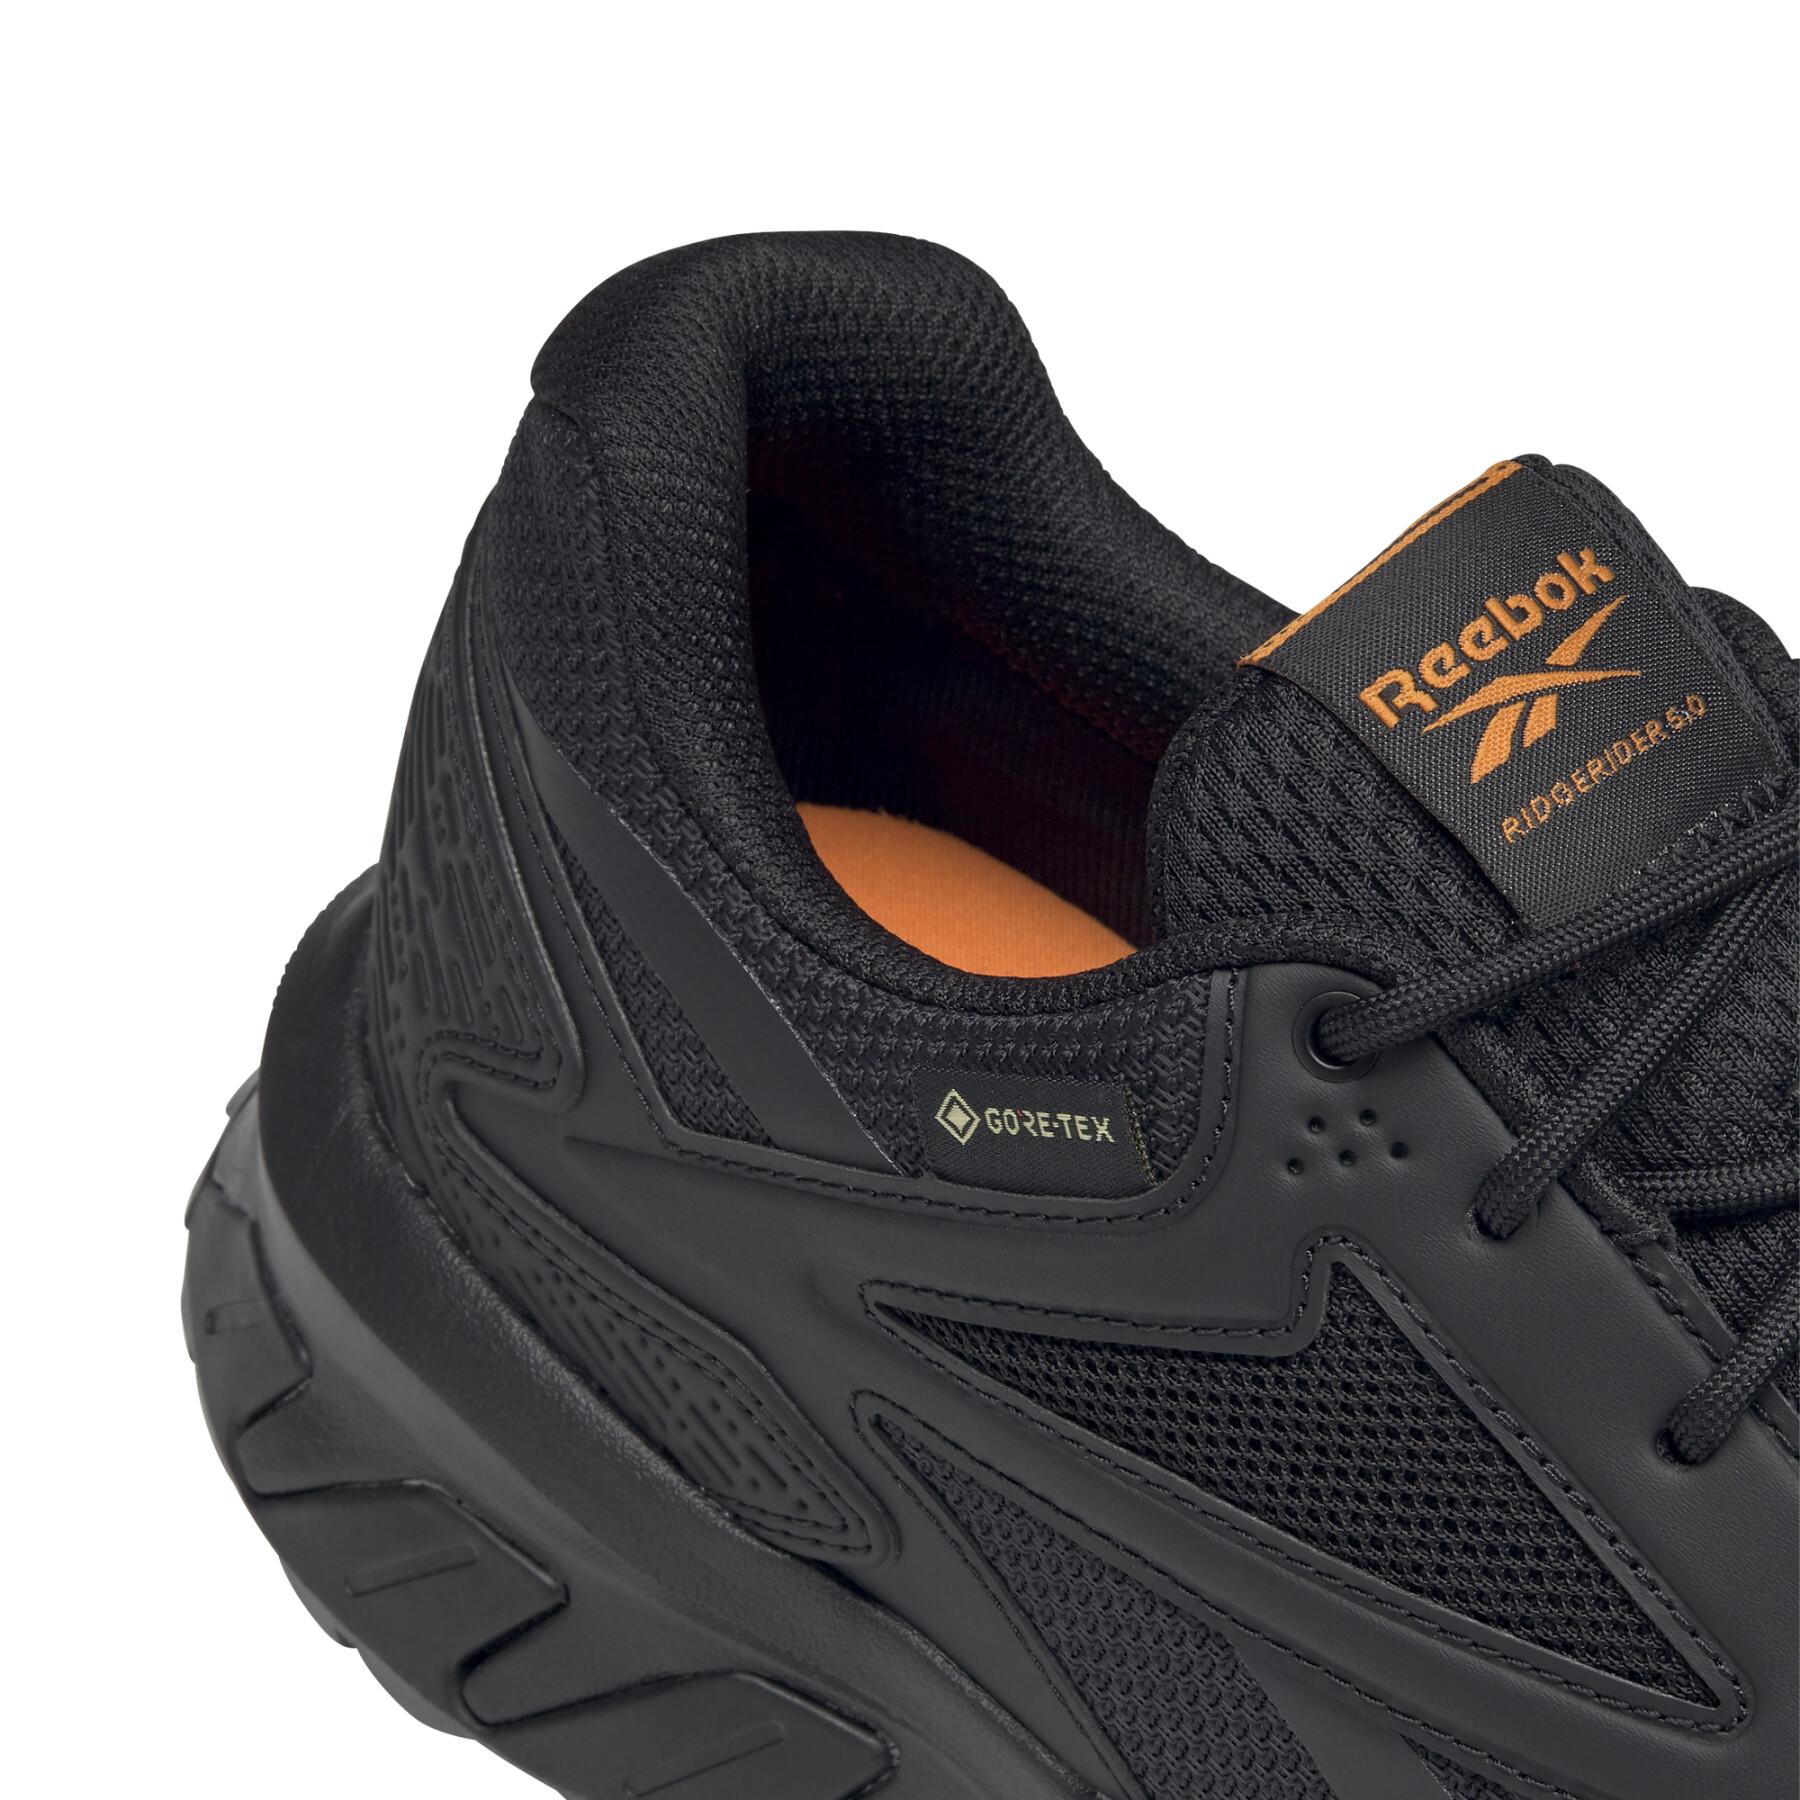 Schuhe Reebok Ridgerider GTX 5.0